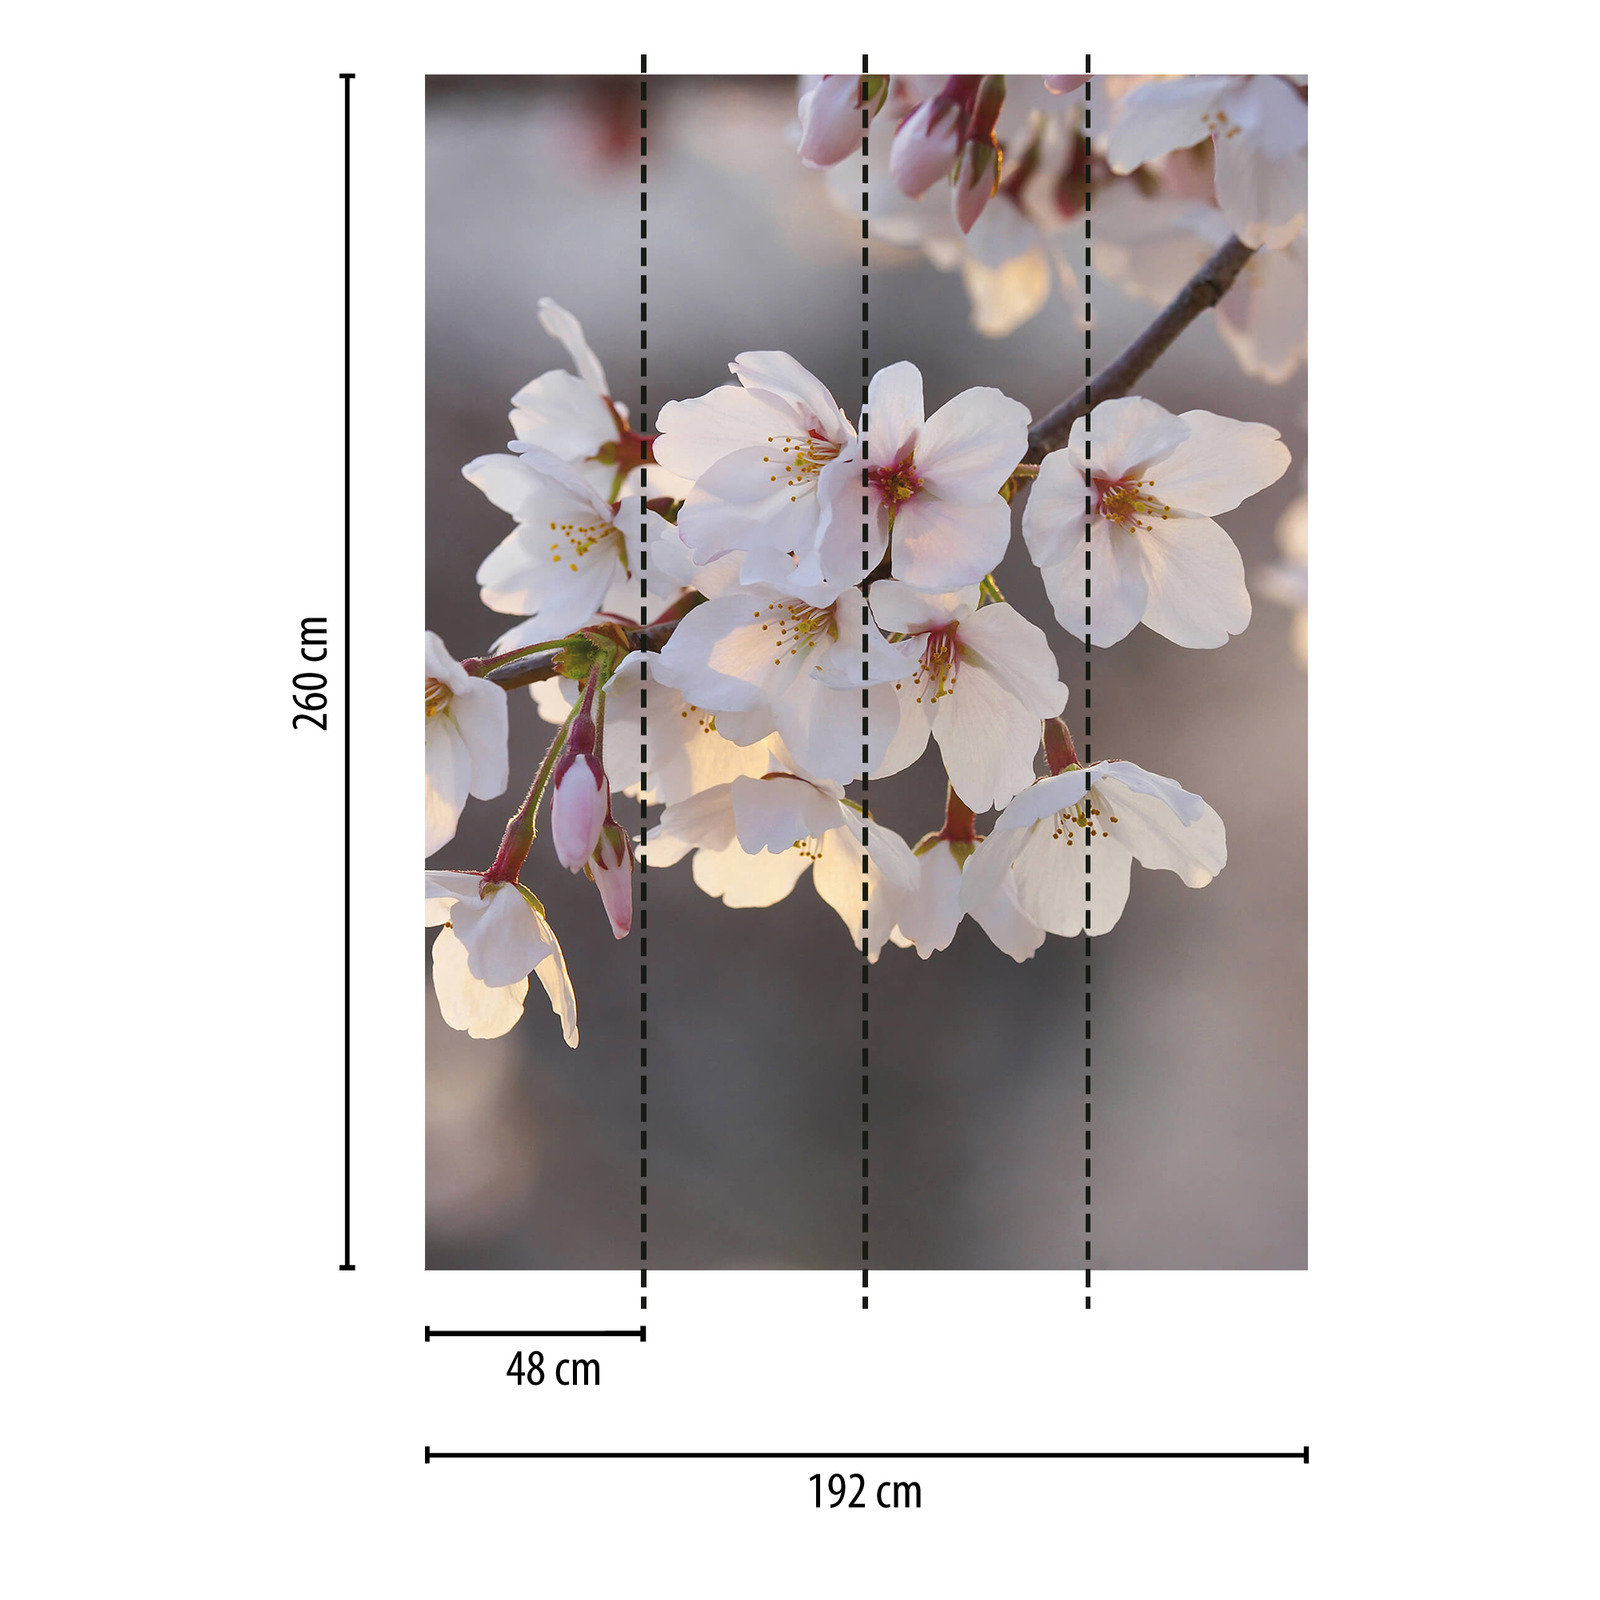             Narrow Cherry Blossom Behang - Roze, Wit
        